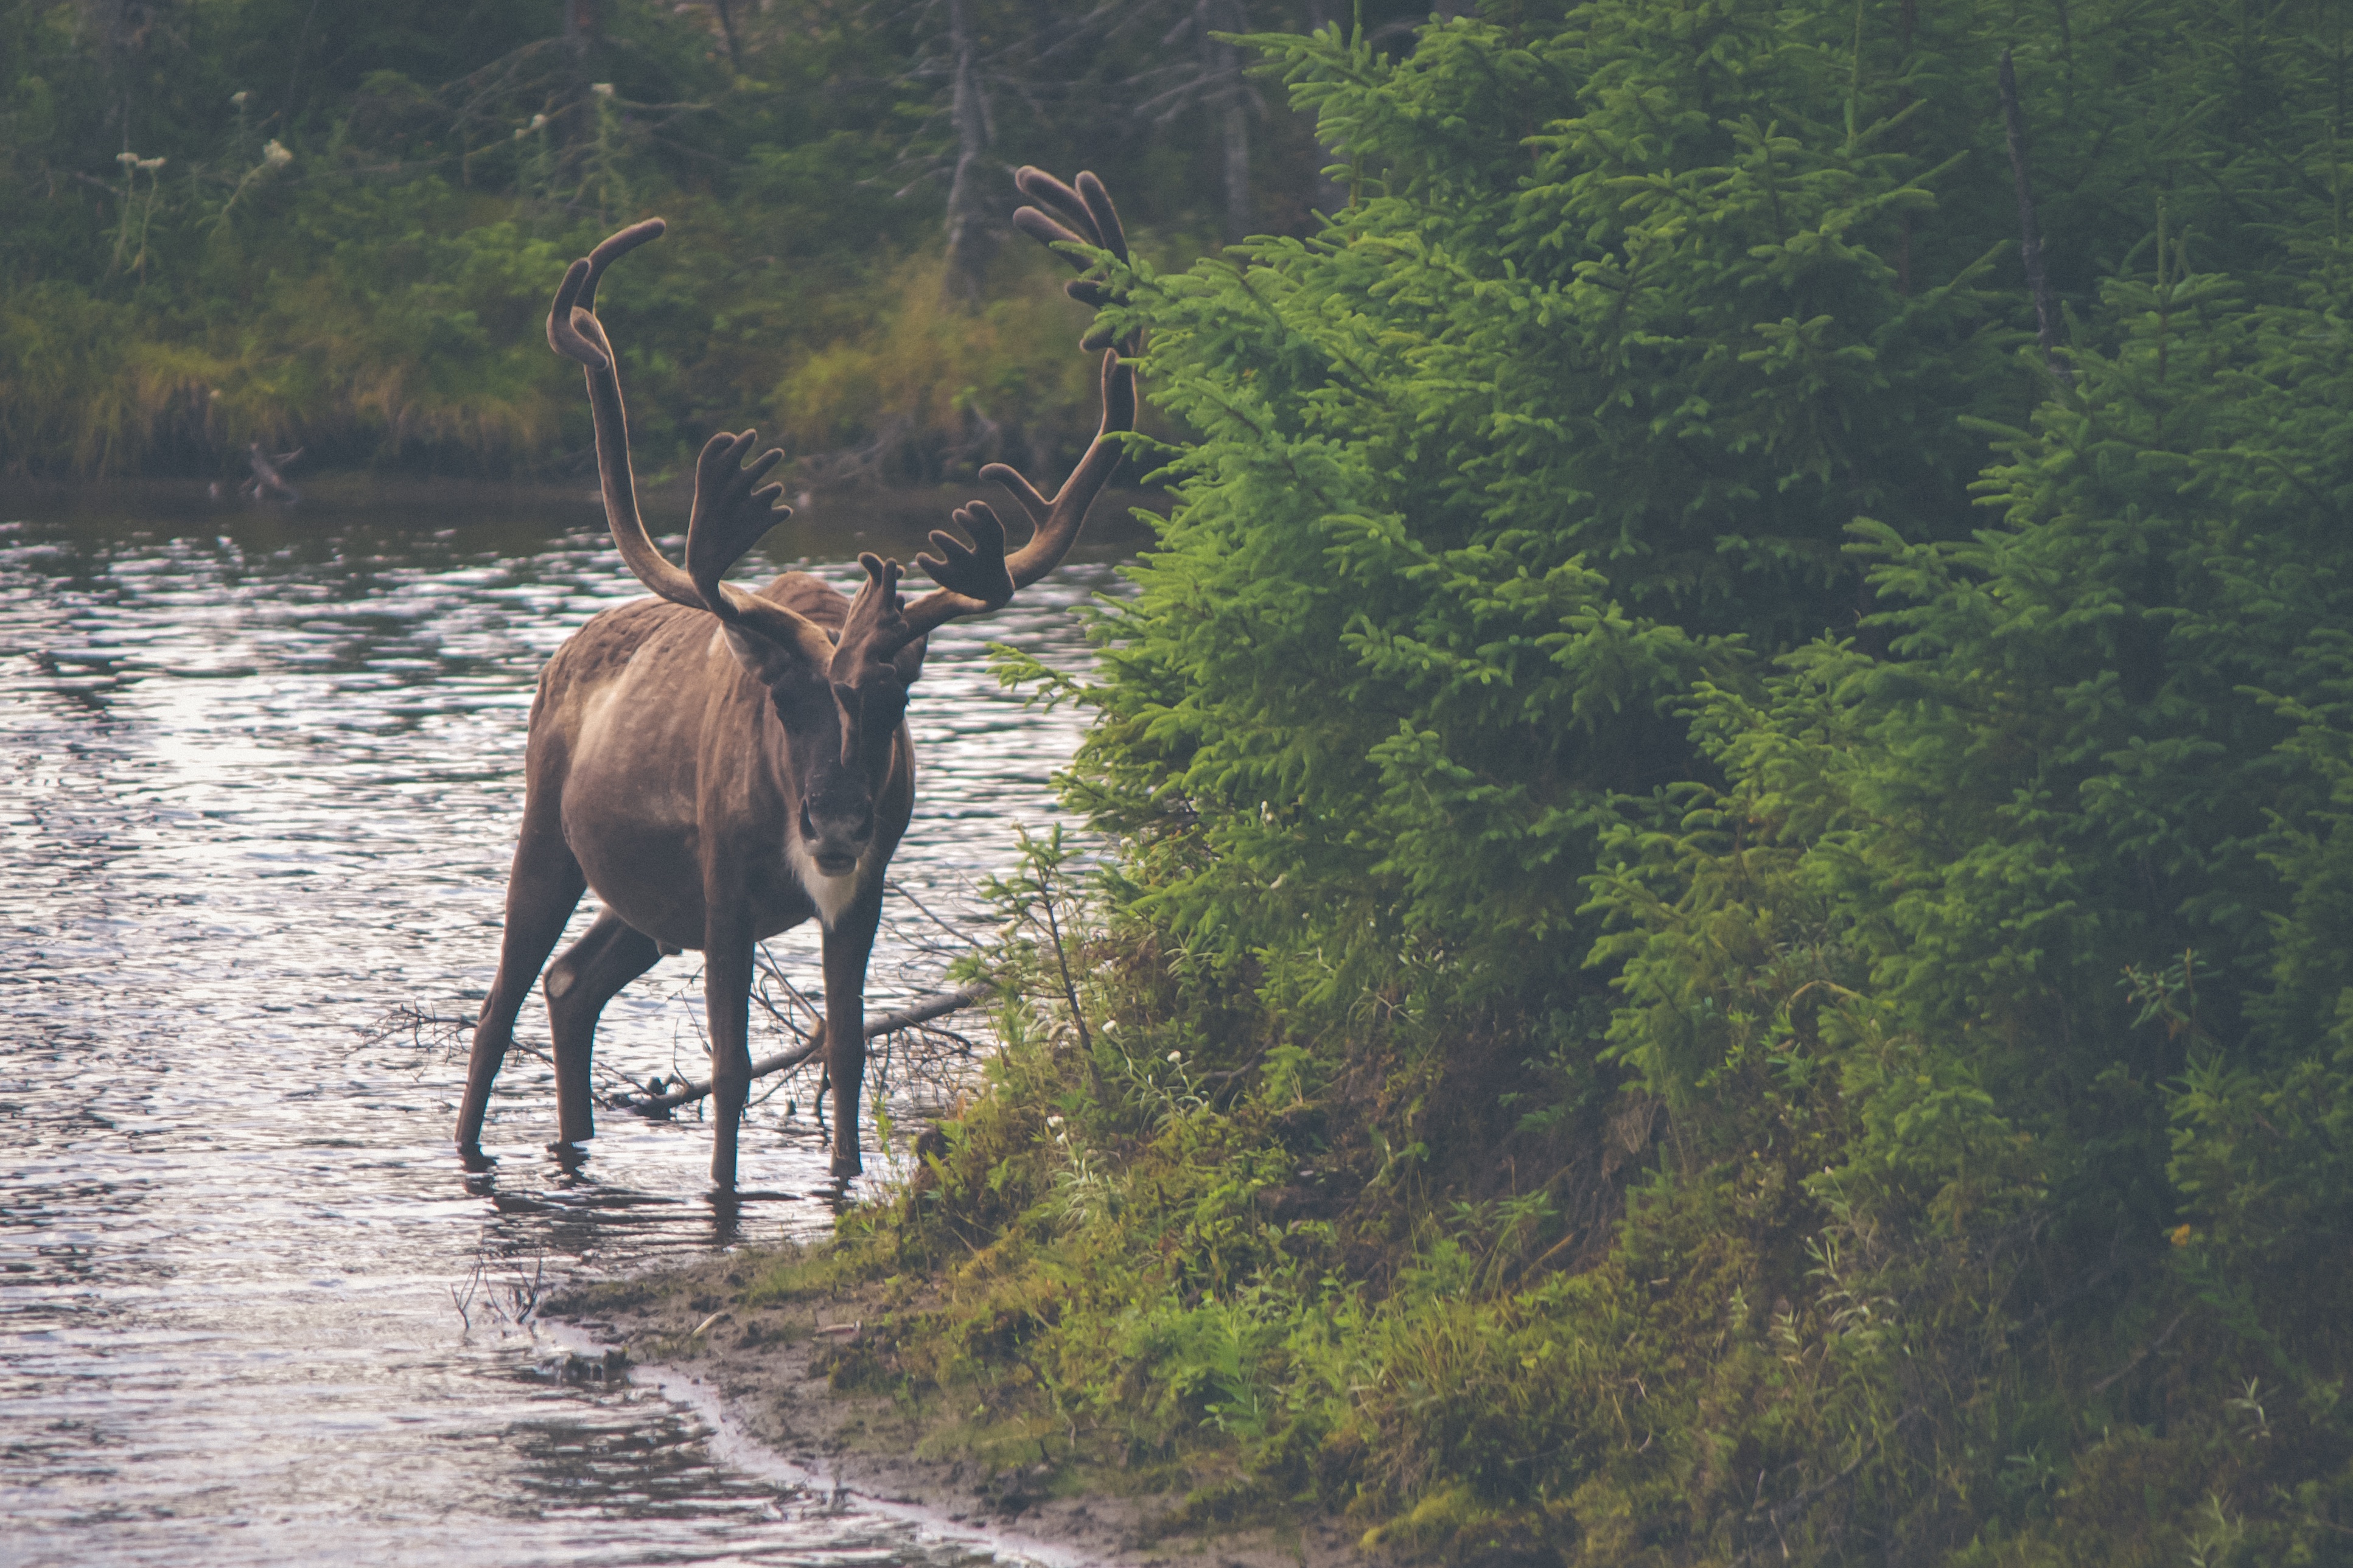 A deer walks in a shallow river